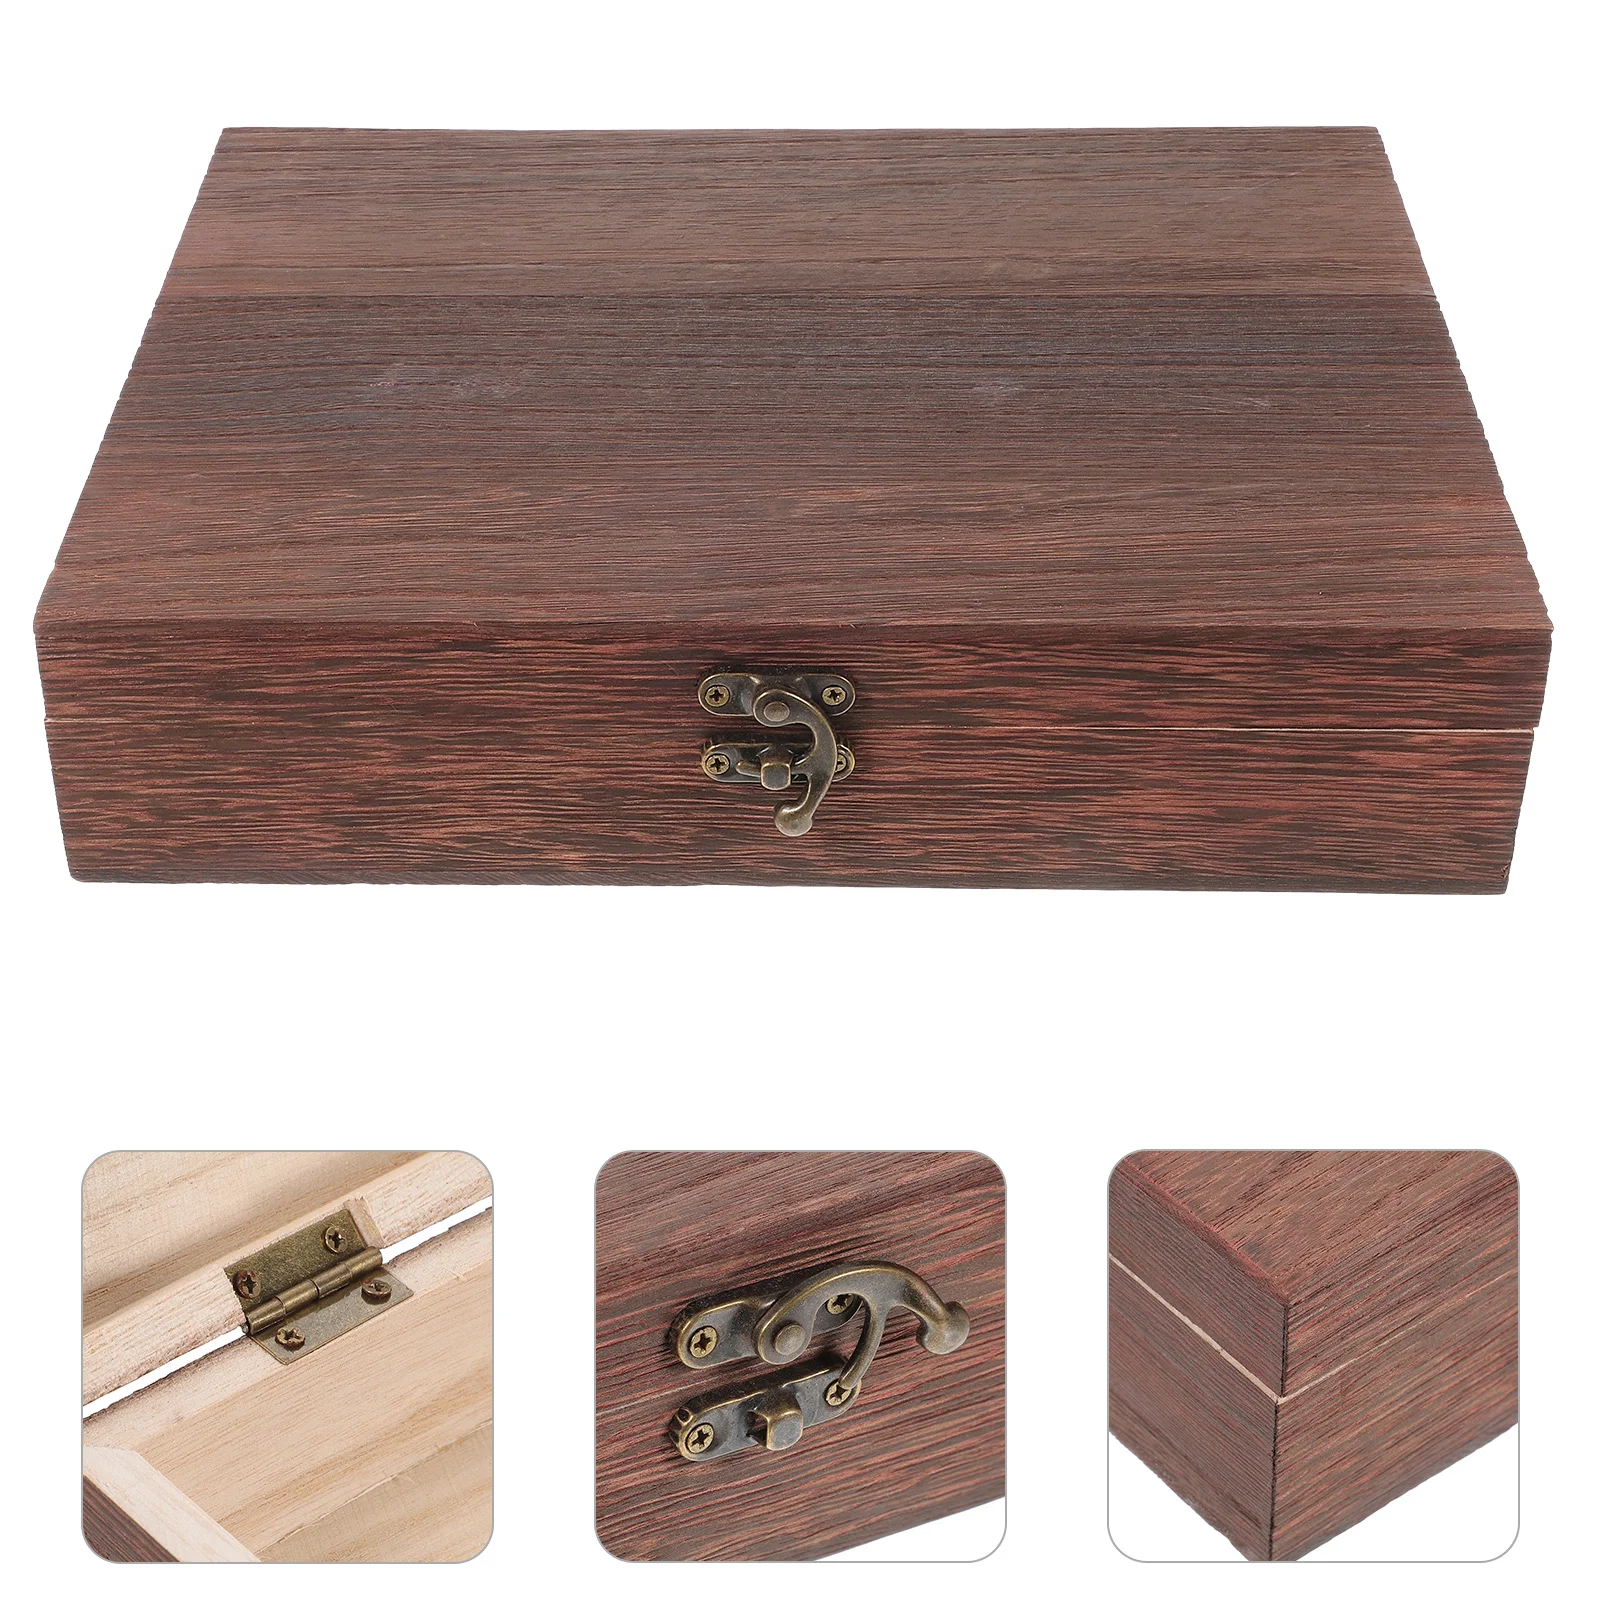 

Box Wooden Storage Wood Boxes Keepsake Jewelry Case Lids Lid Gift Decorative Lock Hinged Organizer Crafts Vintage Treasure Tray